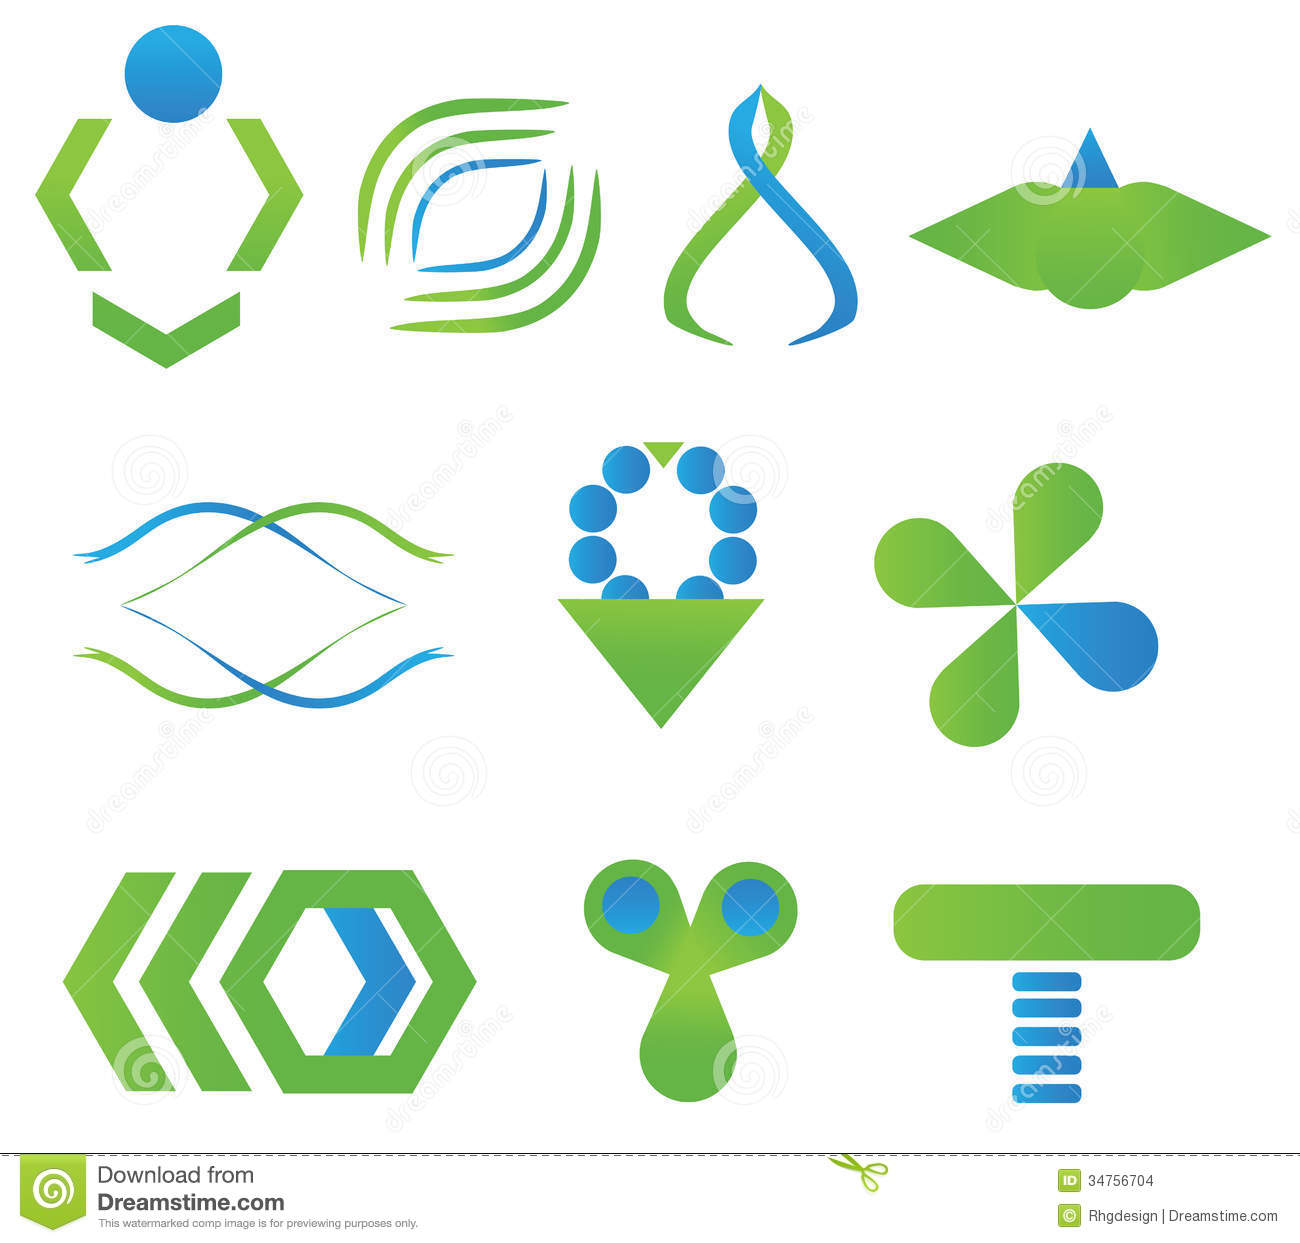 Graphic Icons and Symbols